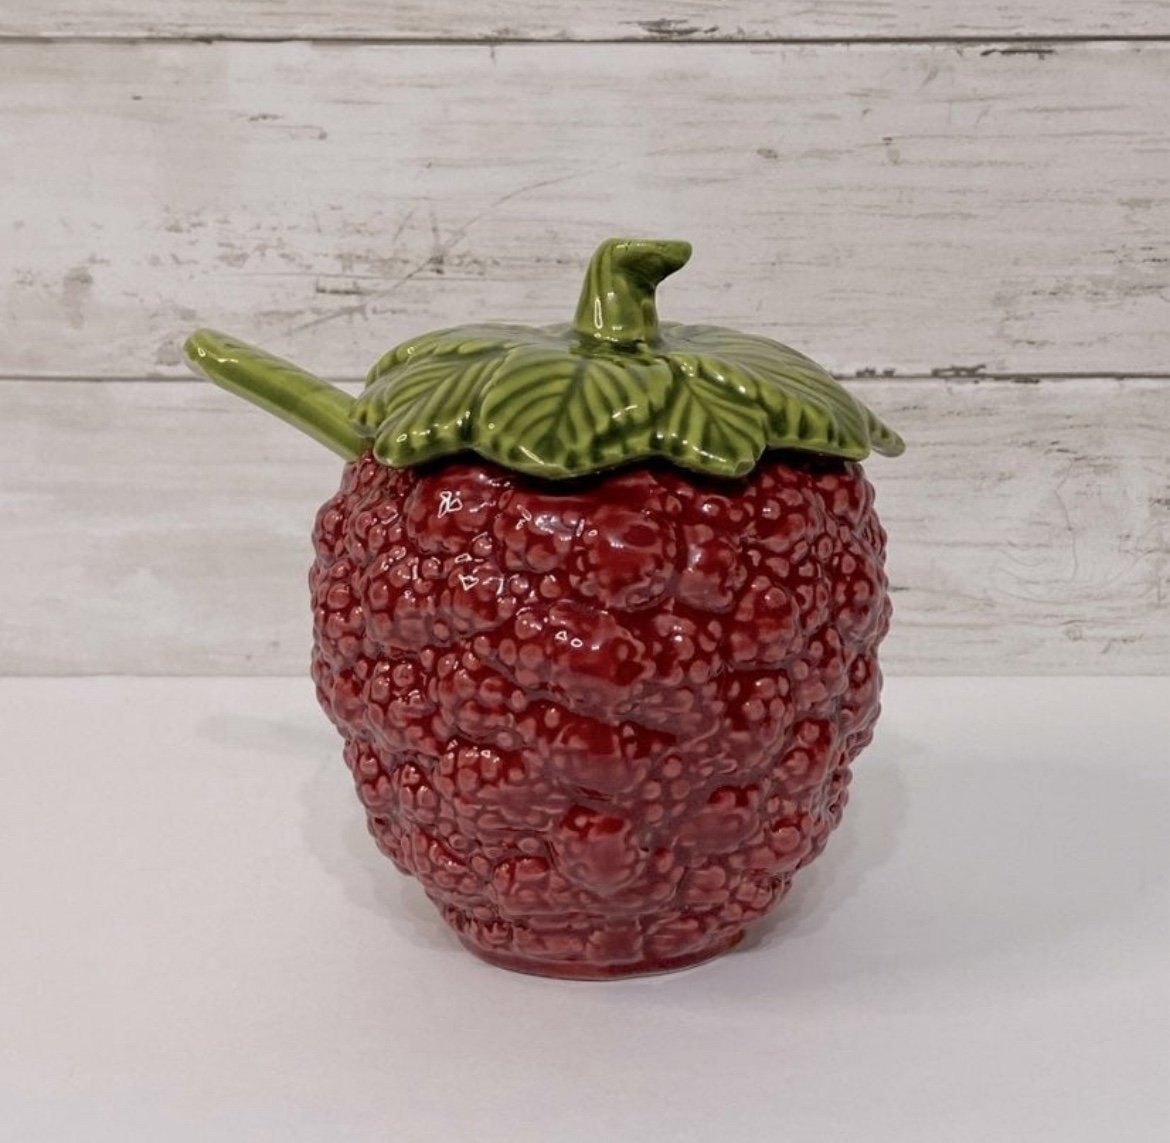 VTG Glazed Ceramic Raspberry Jam Jar with Spoon bcMCsbVOq